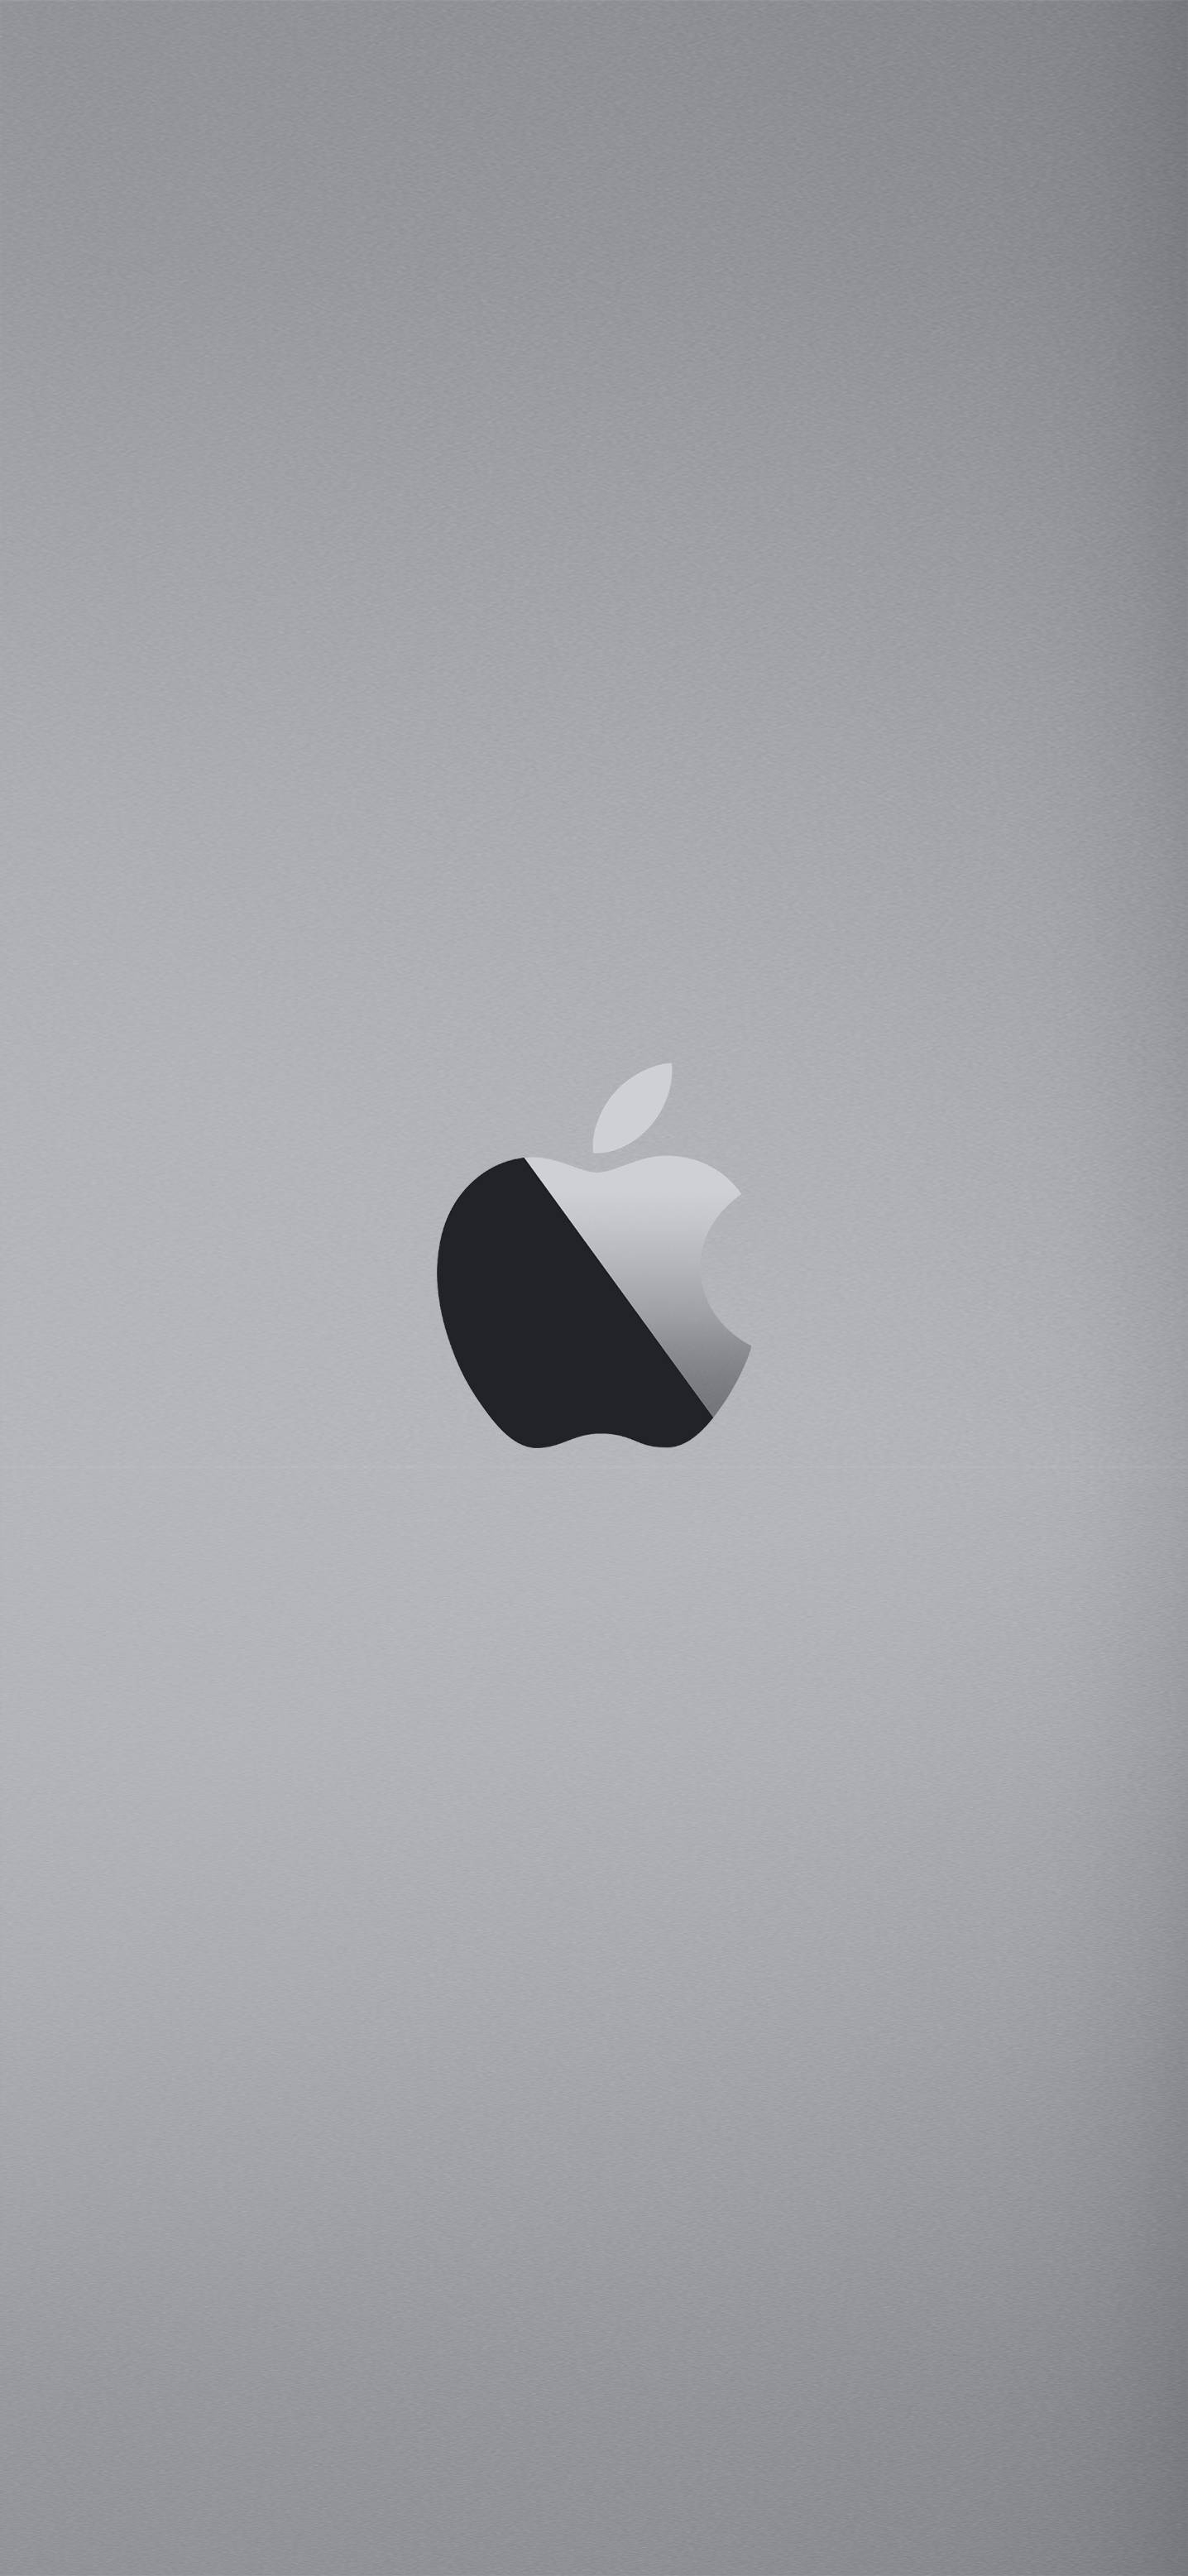 Apple Logo Wallpapers On Wallpaperdog